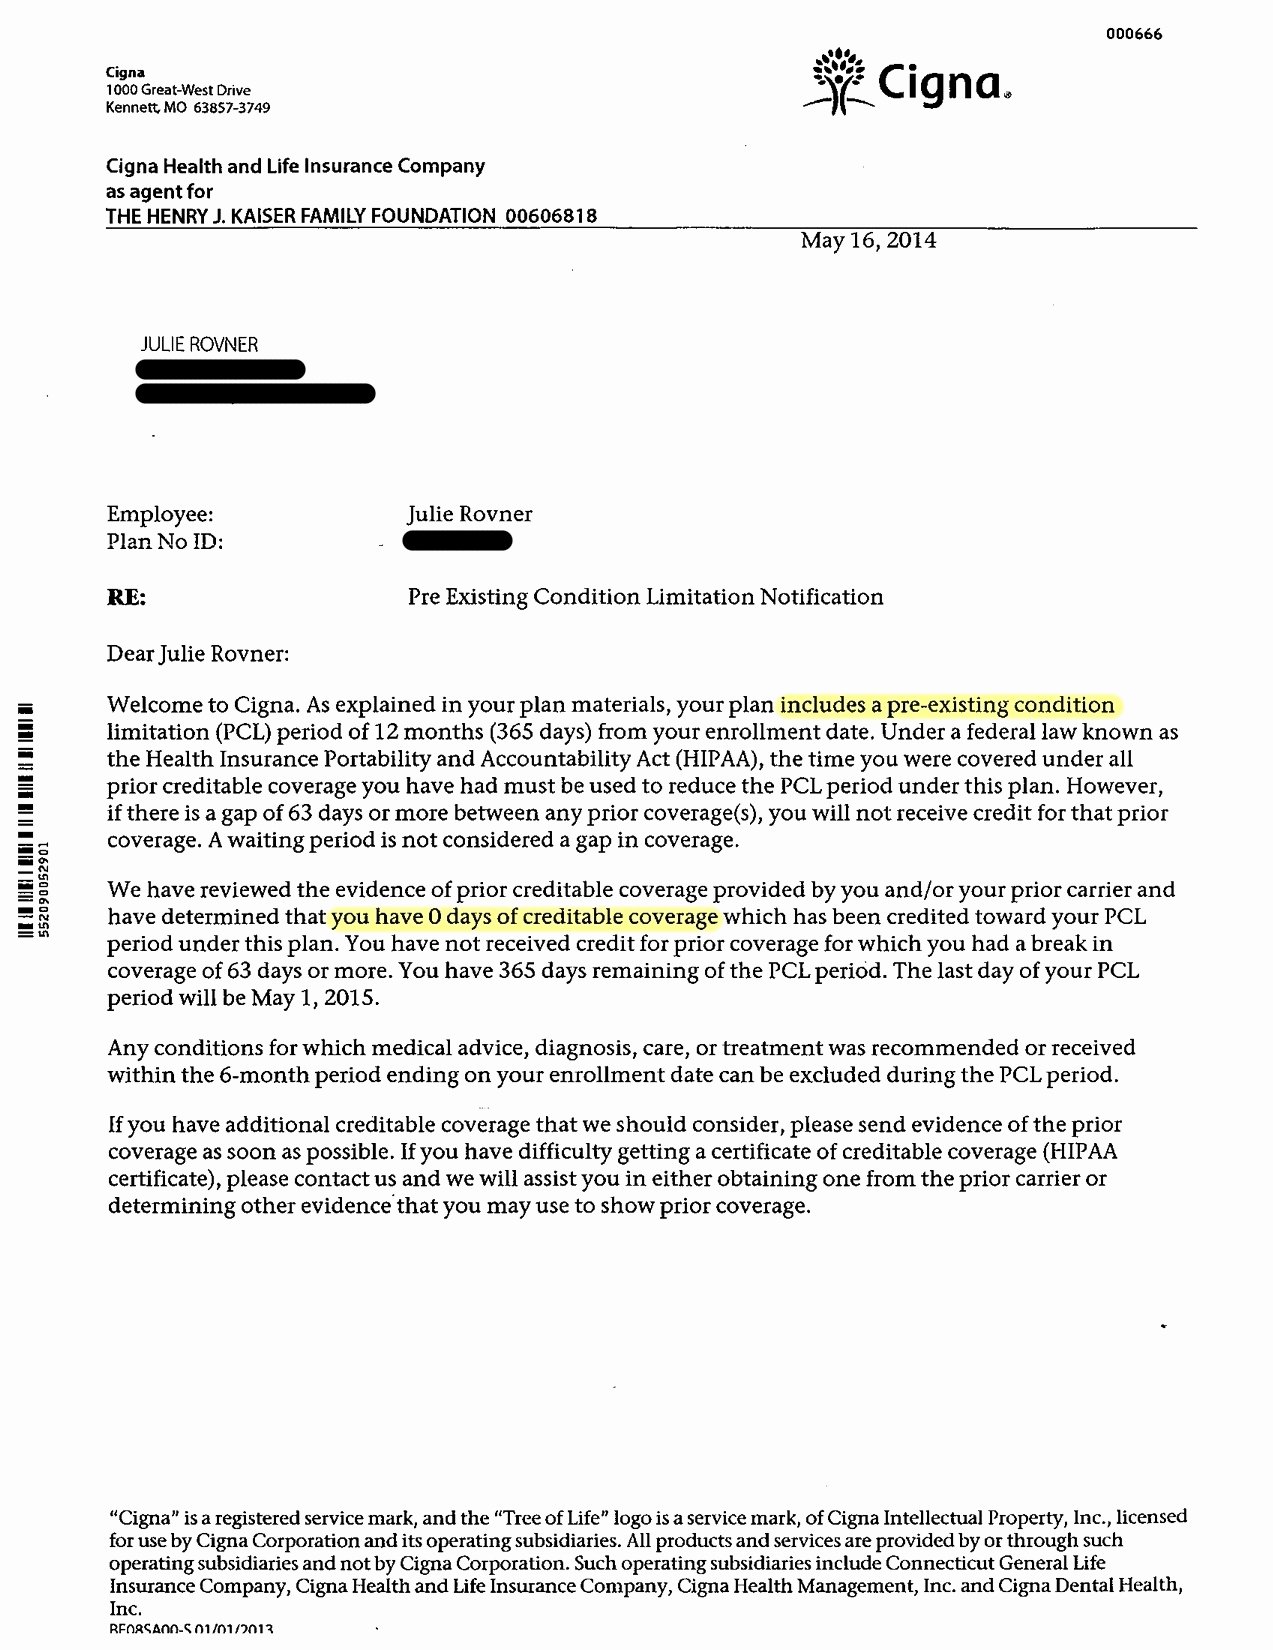 Fake Proof Of Insurance Templates Lovely Fake Proof Insurance Letter